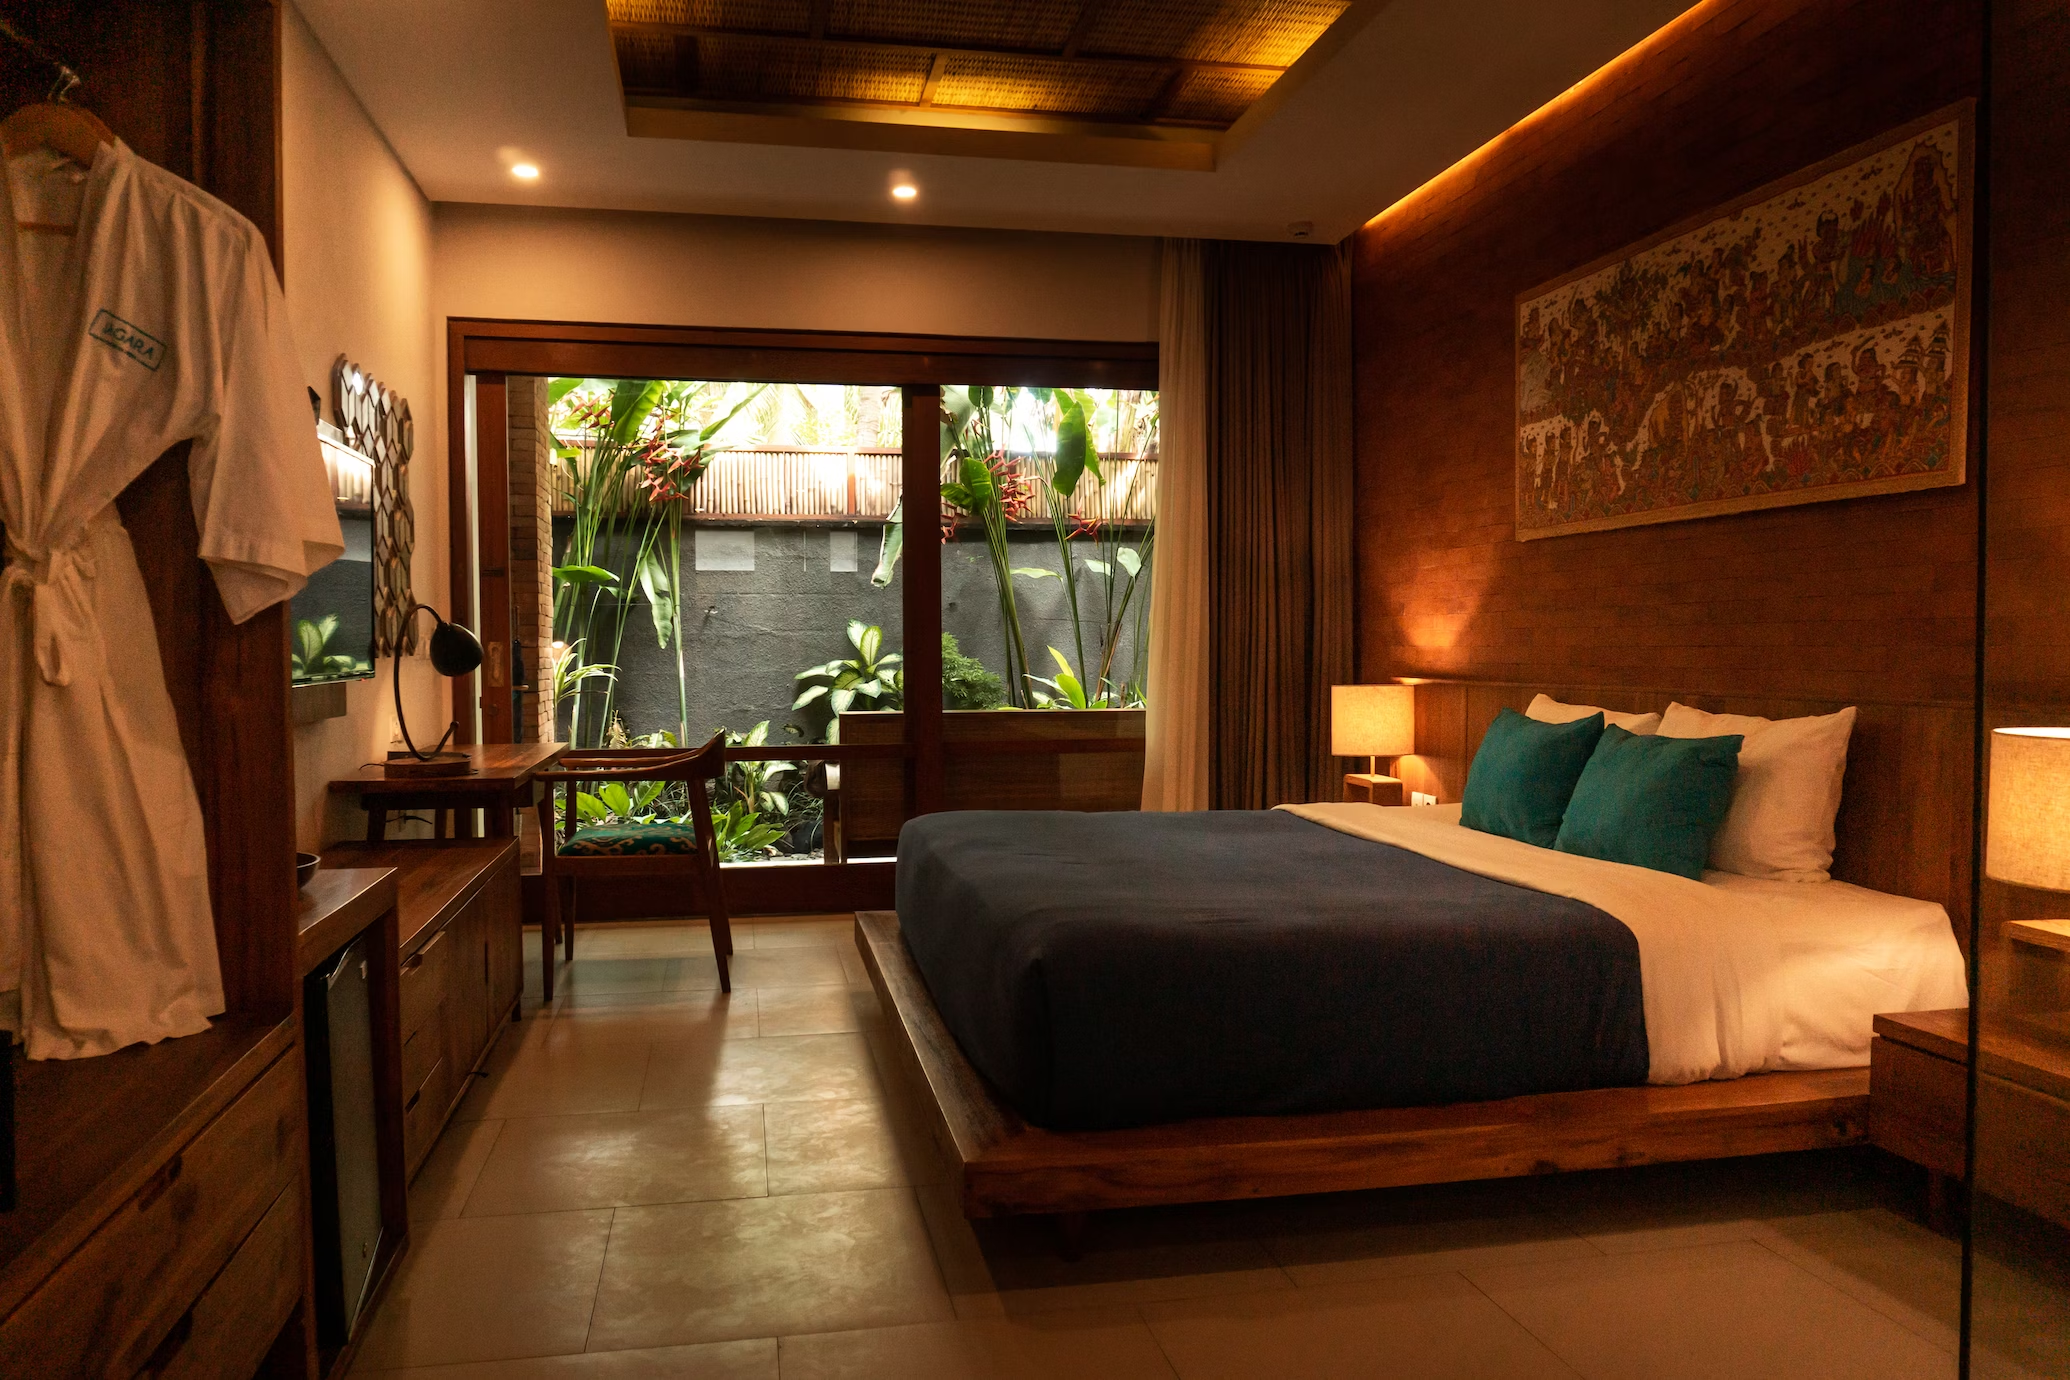 Hotel room in bali, indonesia